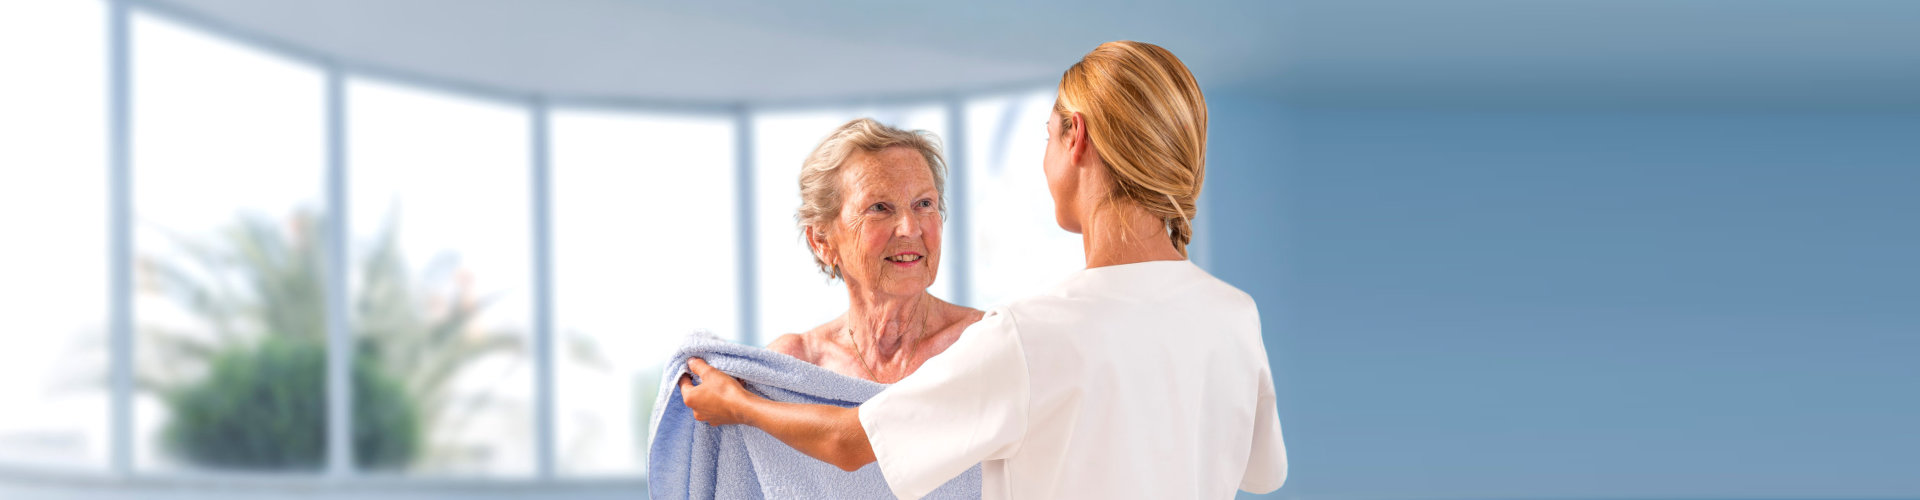 Senior Home Care Services | Home Elderly Care | Abuzz Health Care Services